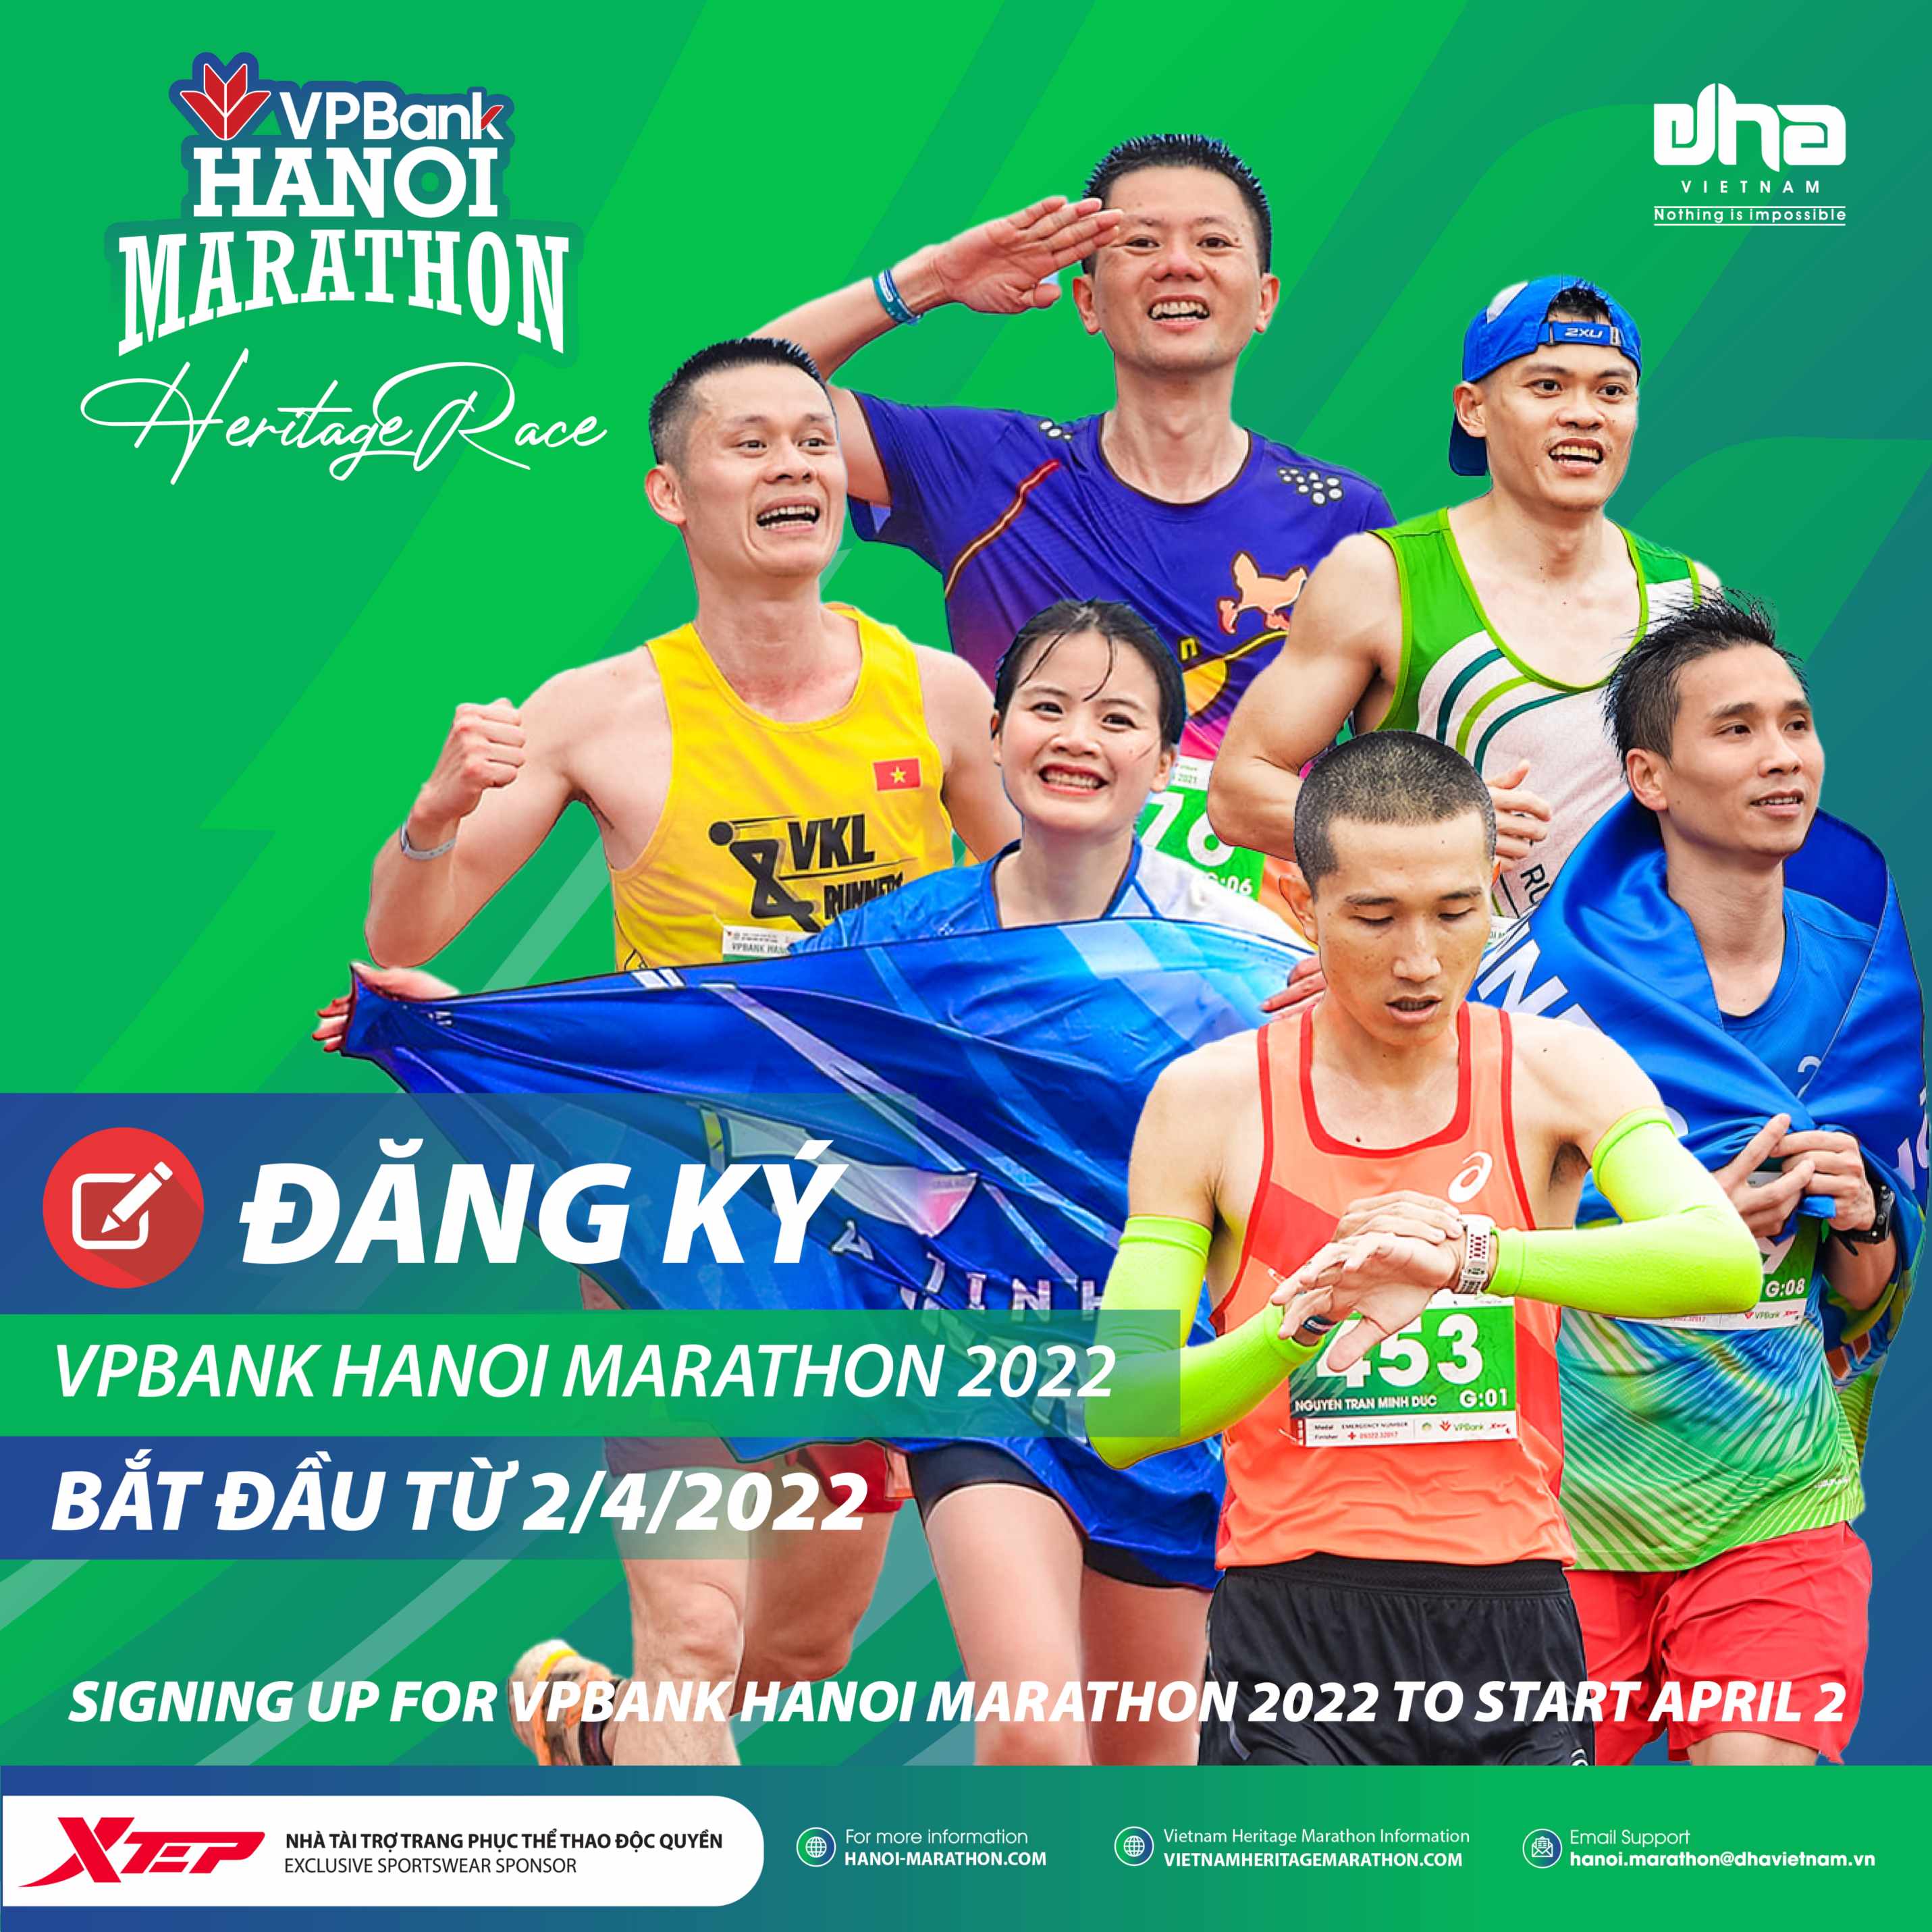 ANNOUNCEMENT: Signing Up for VPBank Hanoi Marathon 2022 to Start April 2